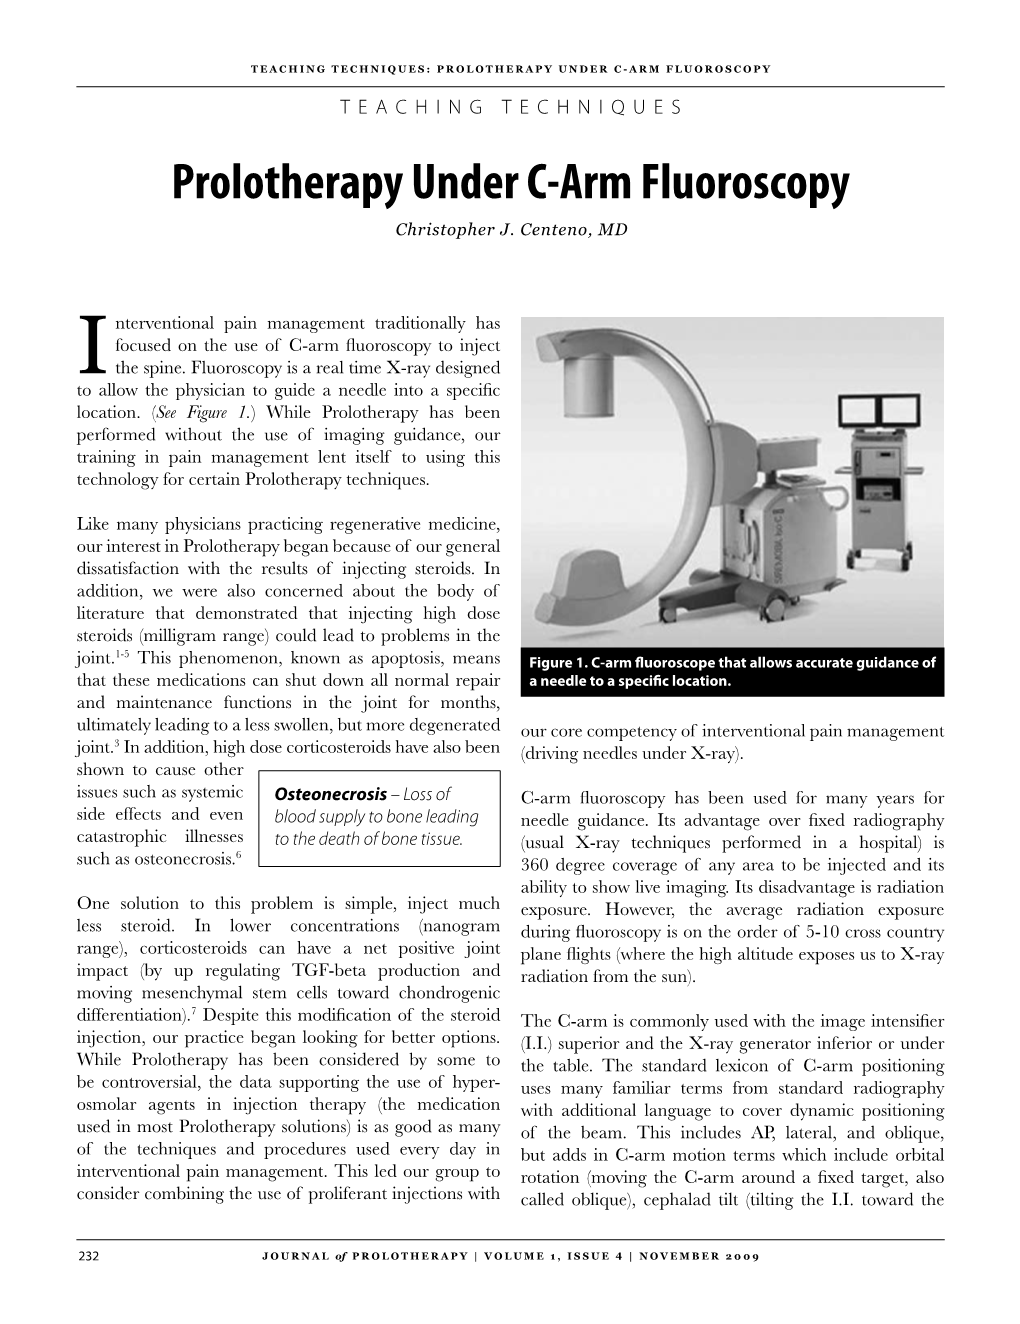 Prolotherapy Under C-Arm Fluoroscopy